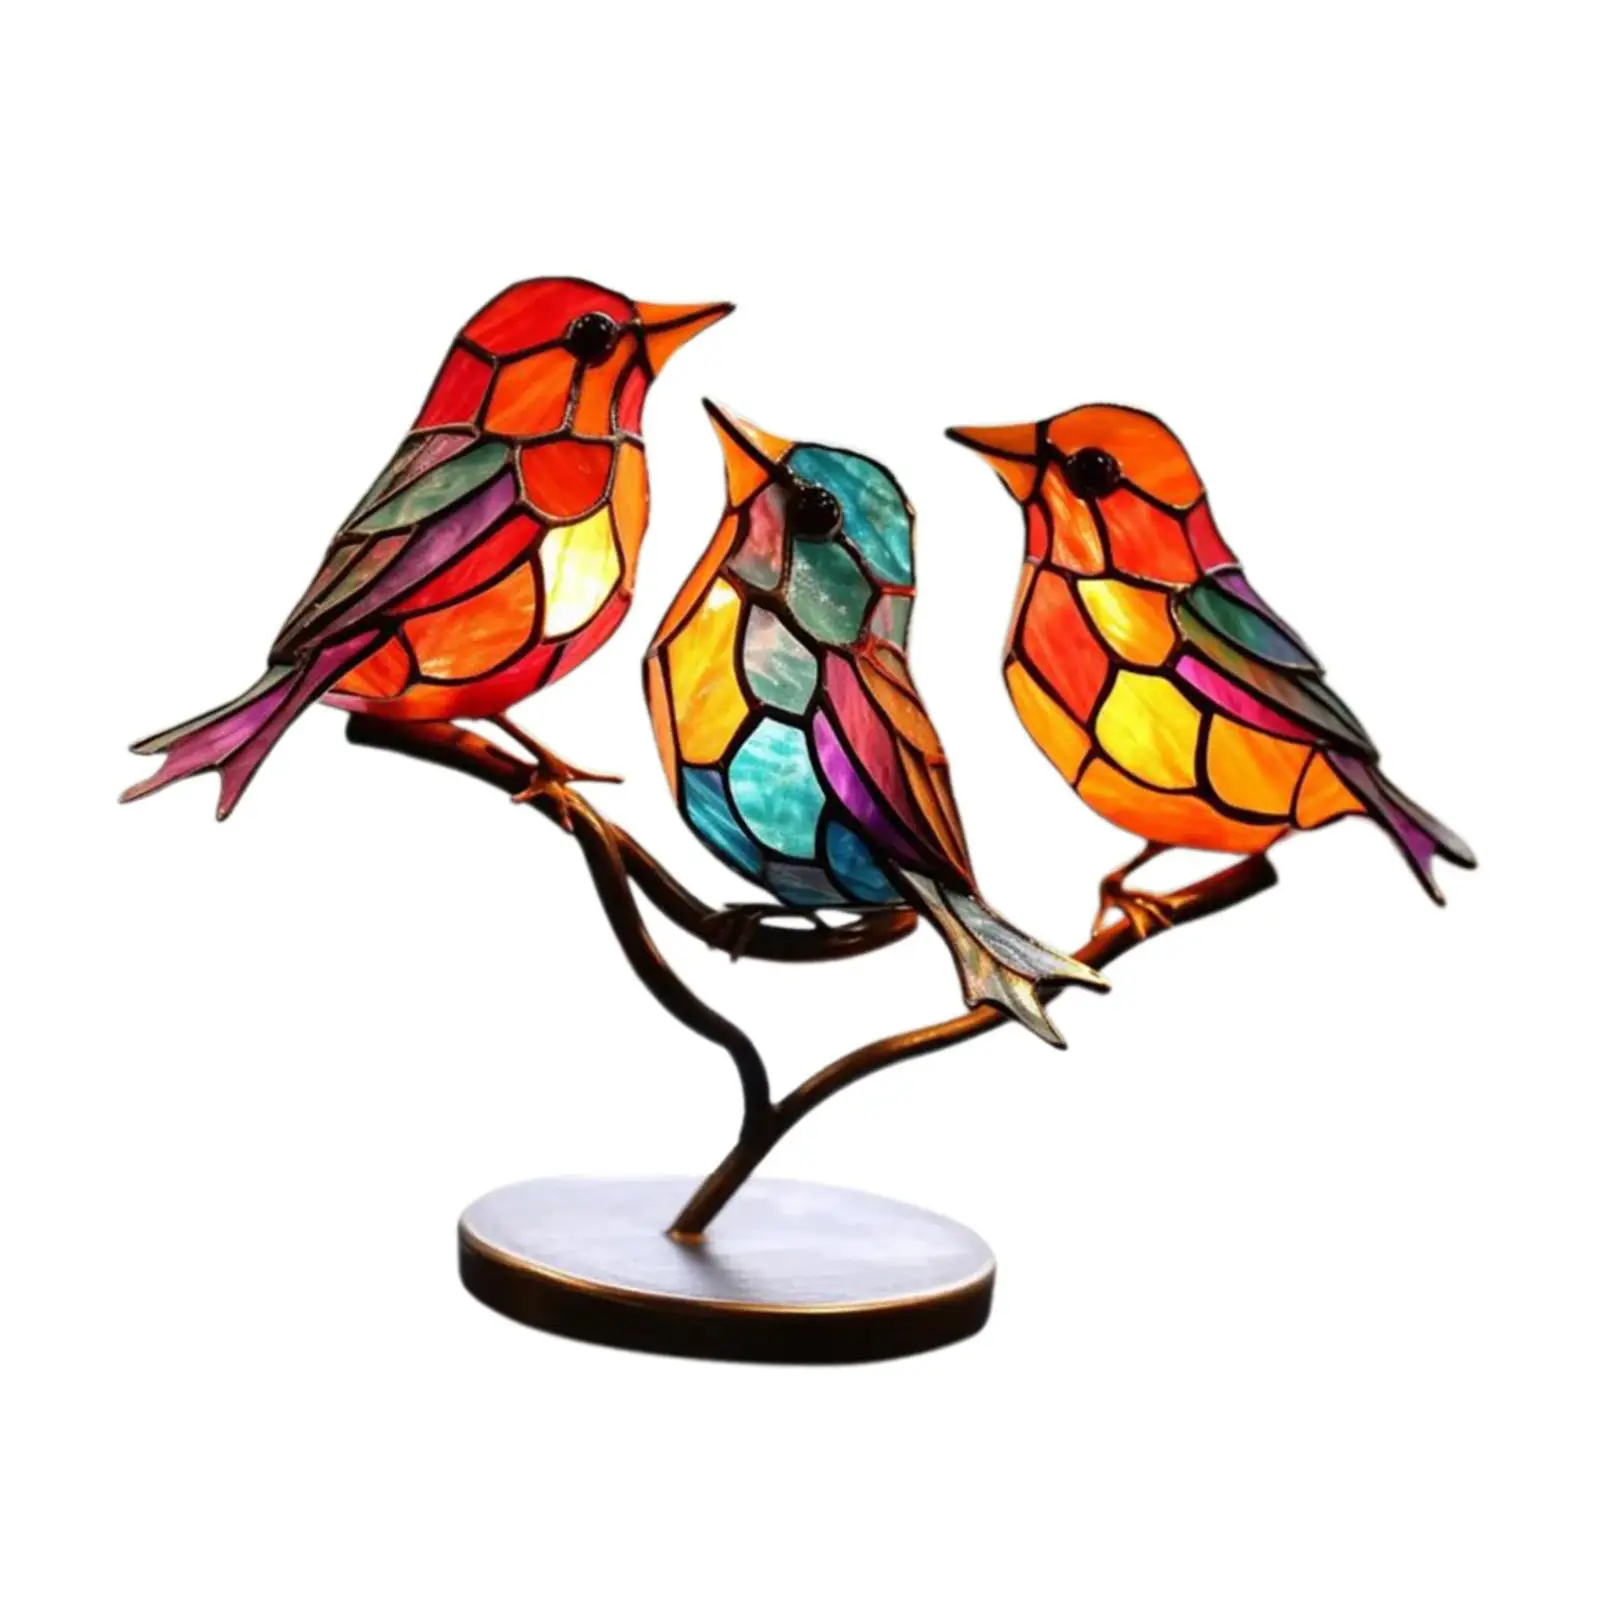 Bird Statue Window Panels Figurines Home Decor Bird Sculpture Birds on Branch